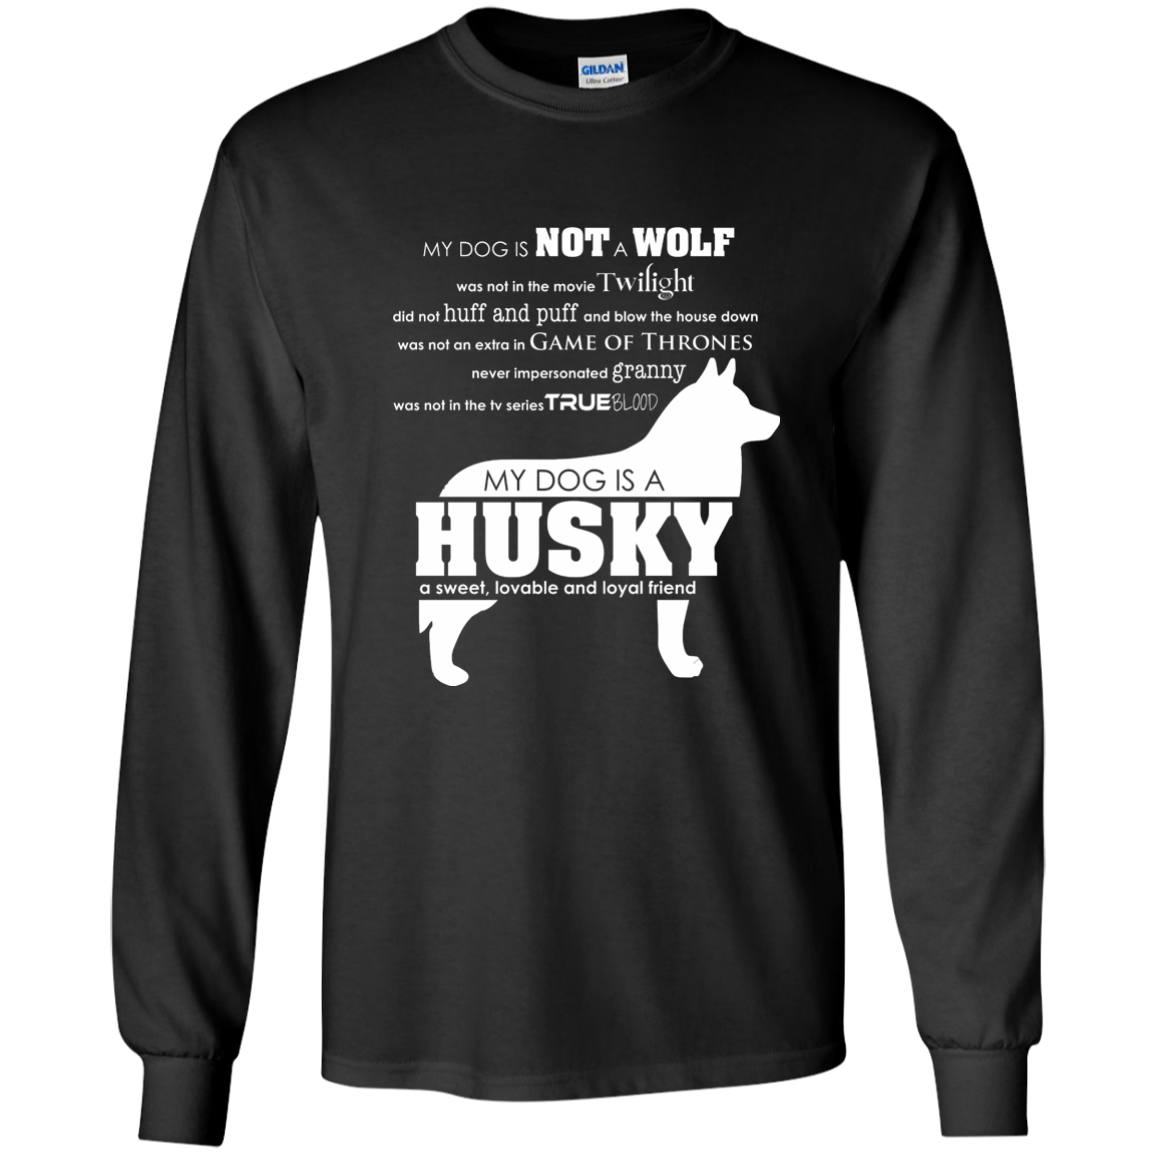 My Dog is Not a Wolf, My Dog is a Husky - Longsleeve Tshirt